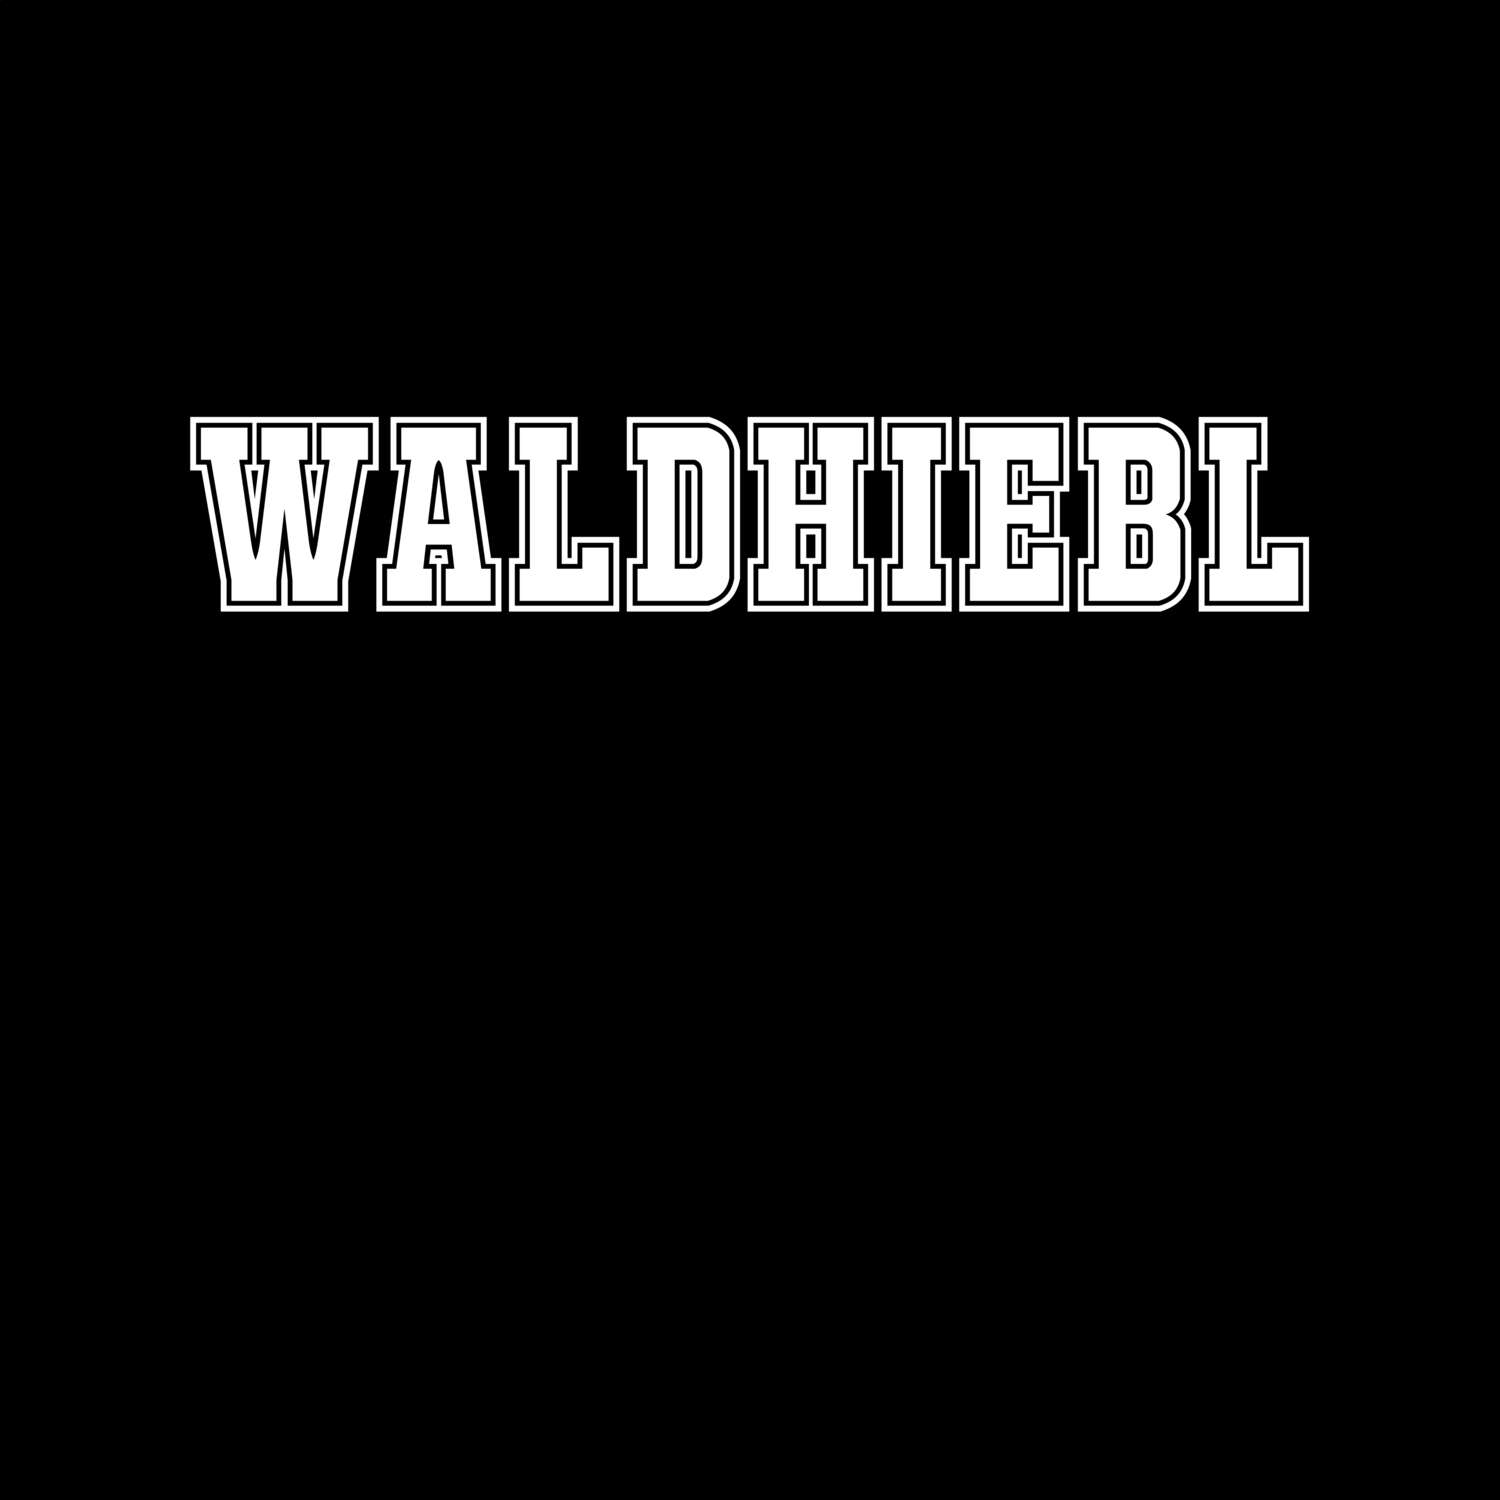 Waldhiebl T-Shirt »Classic«